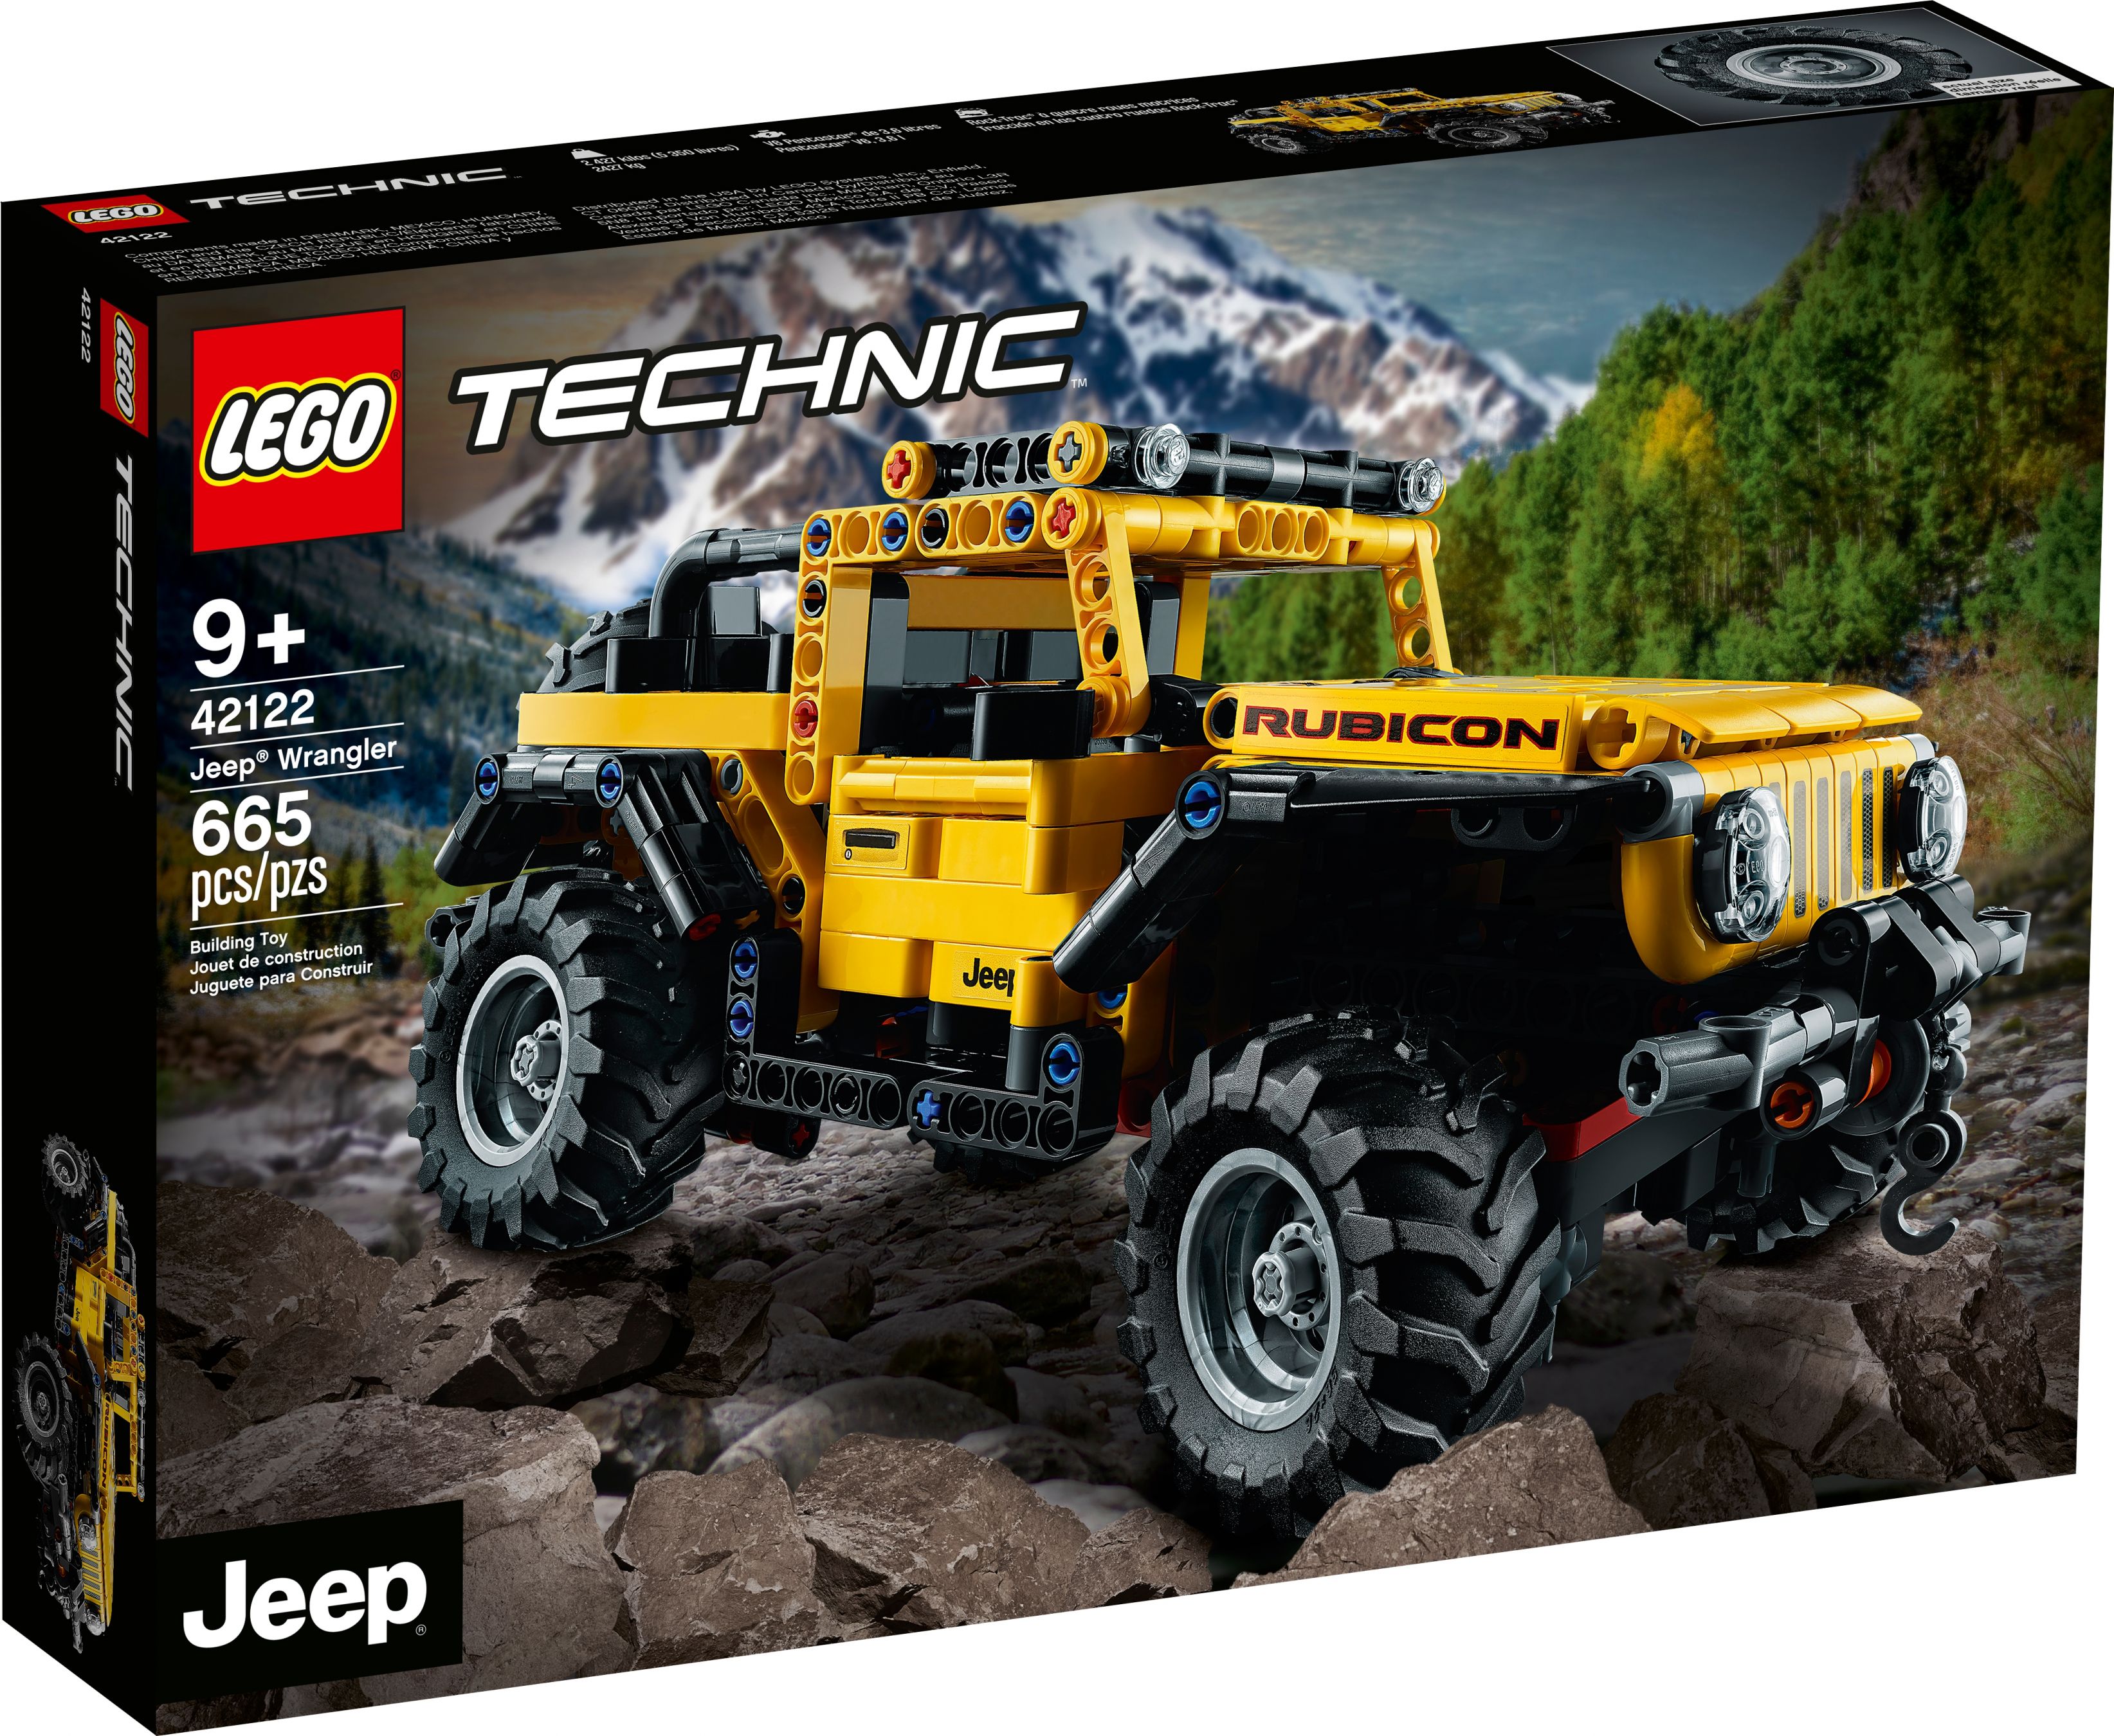 LEGO Technic 42122 Jeep® Wrangler LEGO_42122_box1_v39.jpg